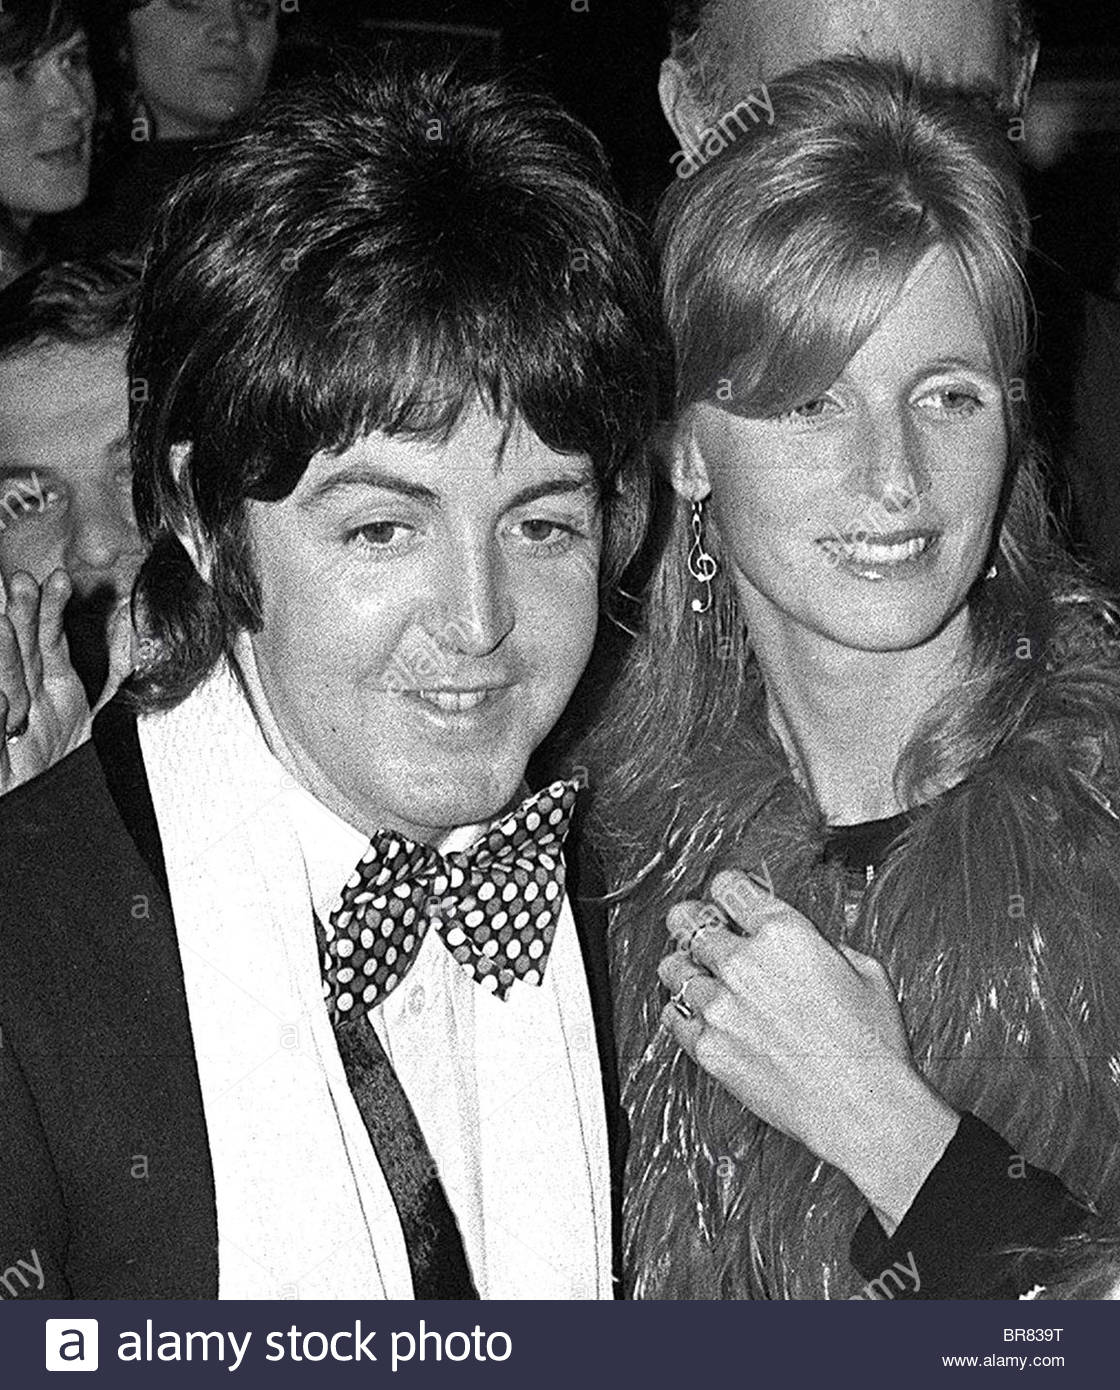 Image result for "Linda McCartney" AND lipstick